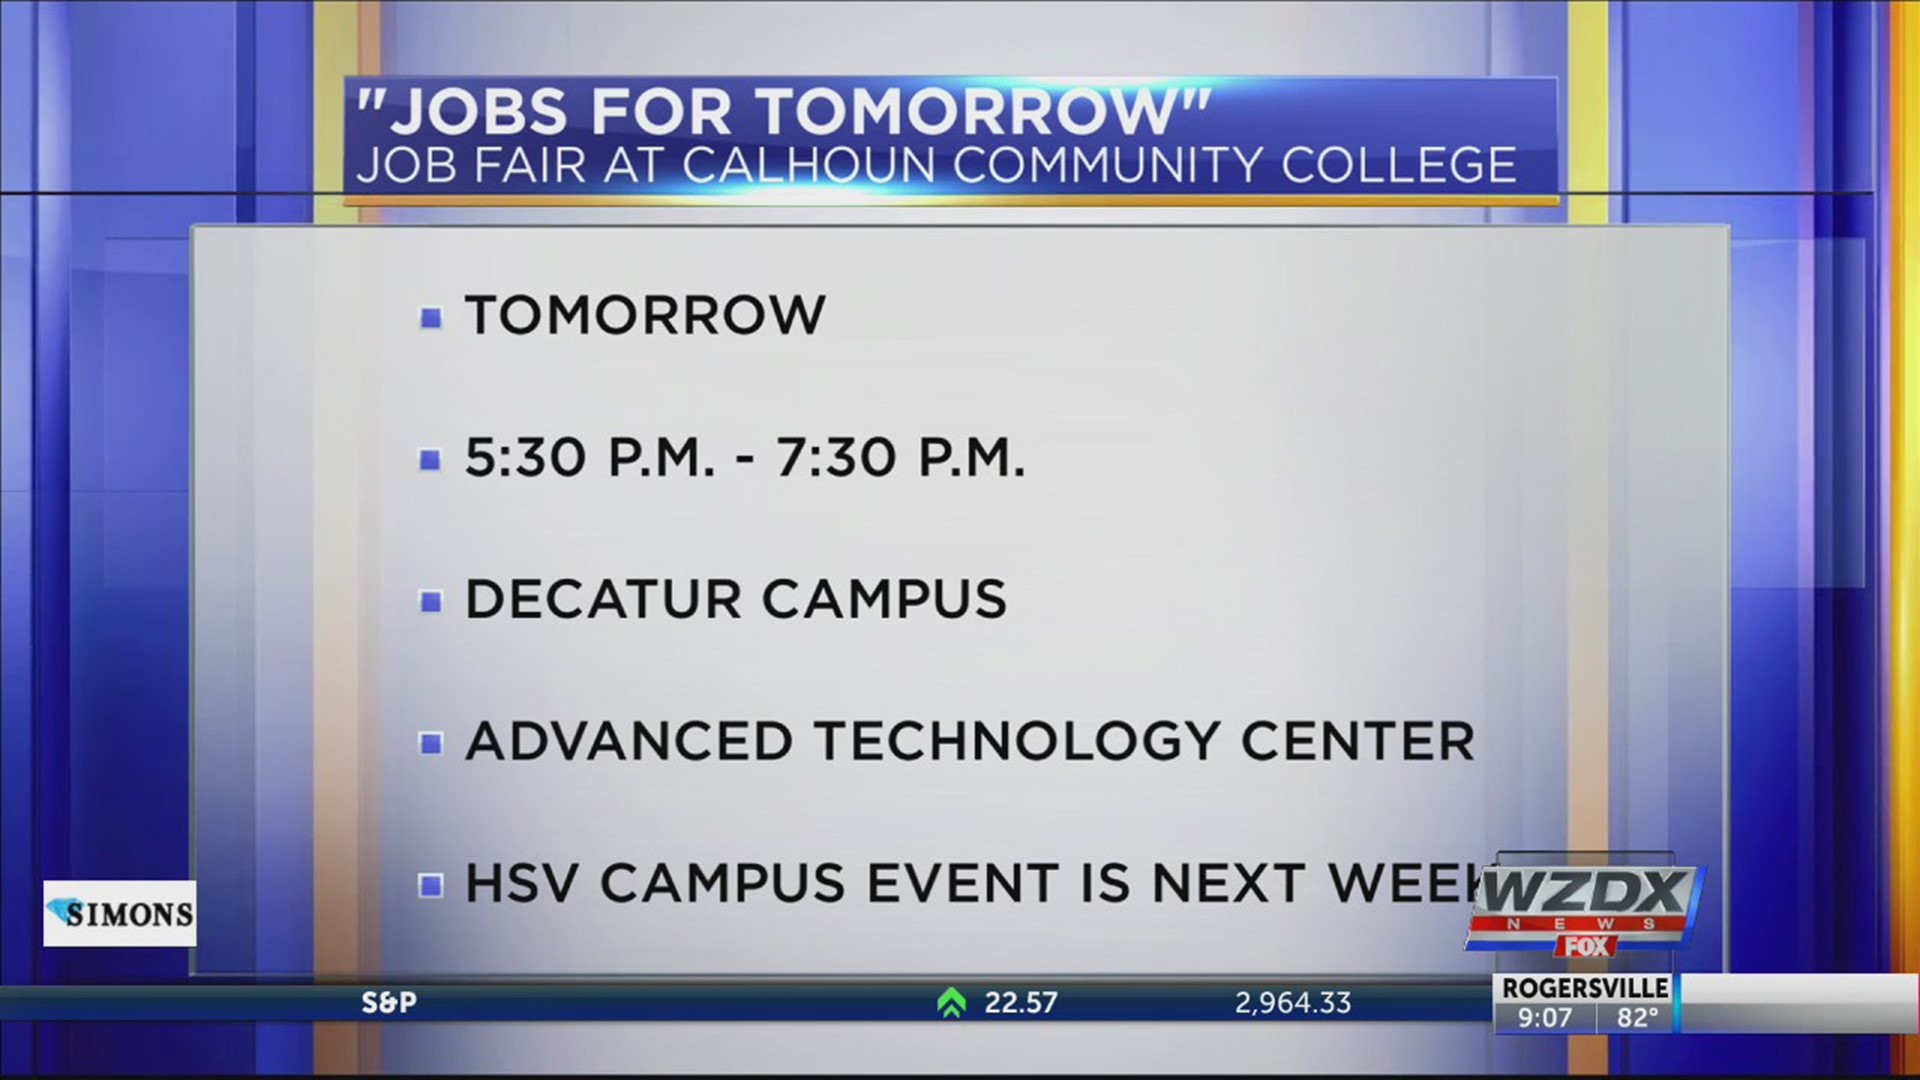 Calhoun Community College is hosting a job fair Tuesday as part of their Jobs for Tomorrow event series.